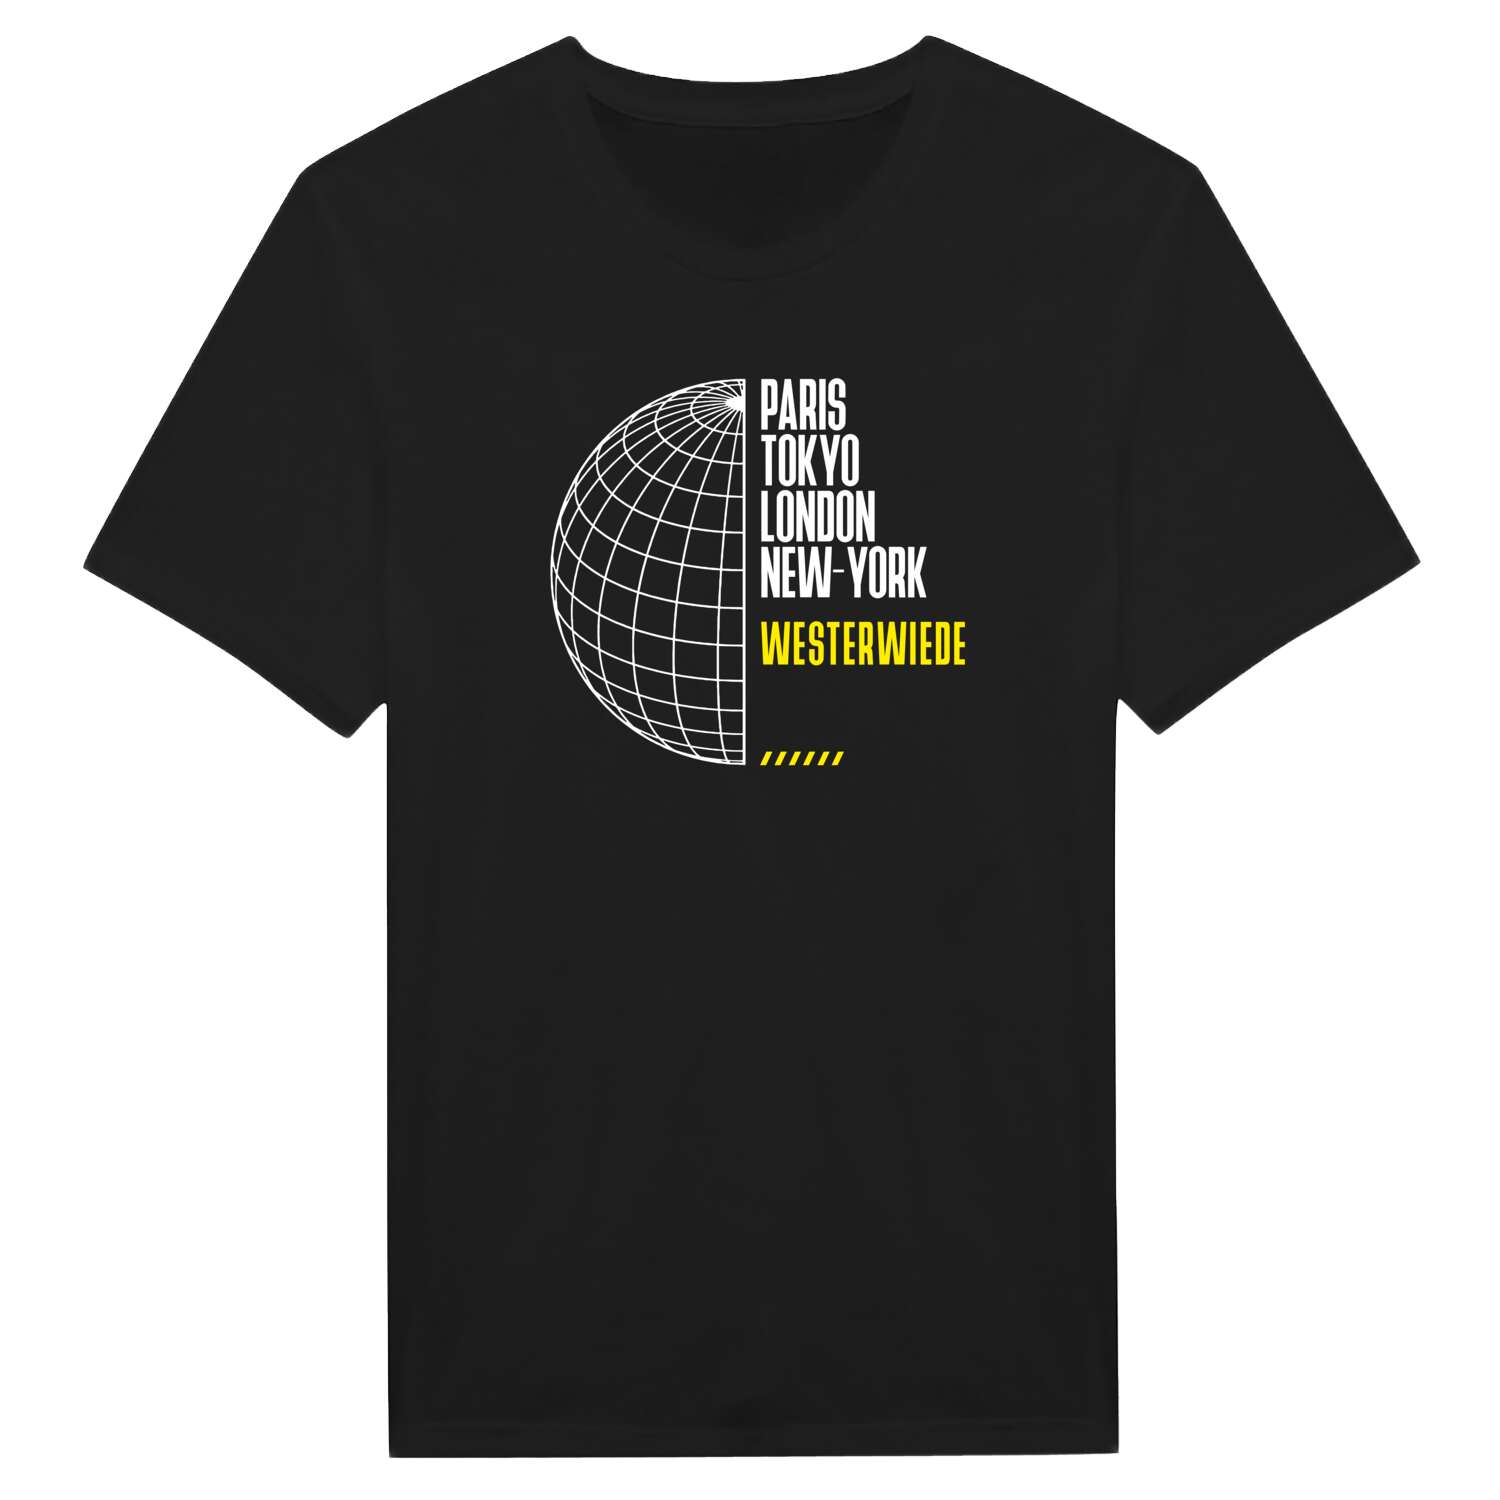 Westerwiede T-Shirt »Paris Tokyo London«